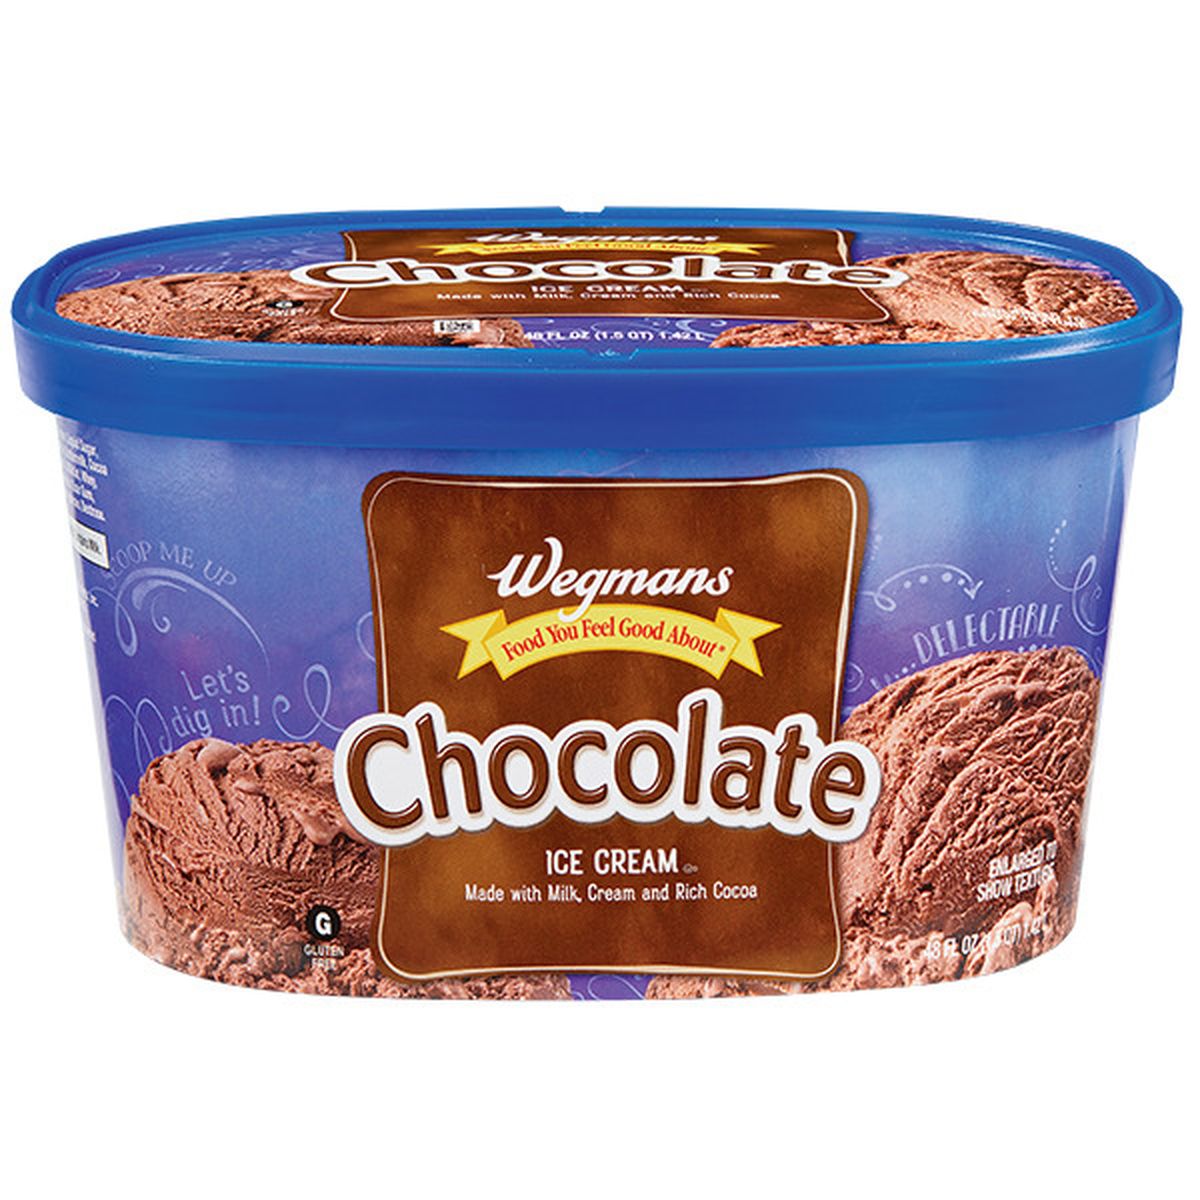 Calories in Wegmans Chocolate Ice Cream